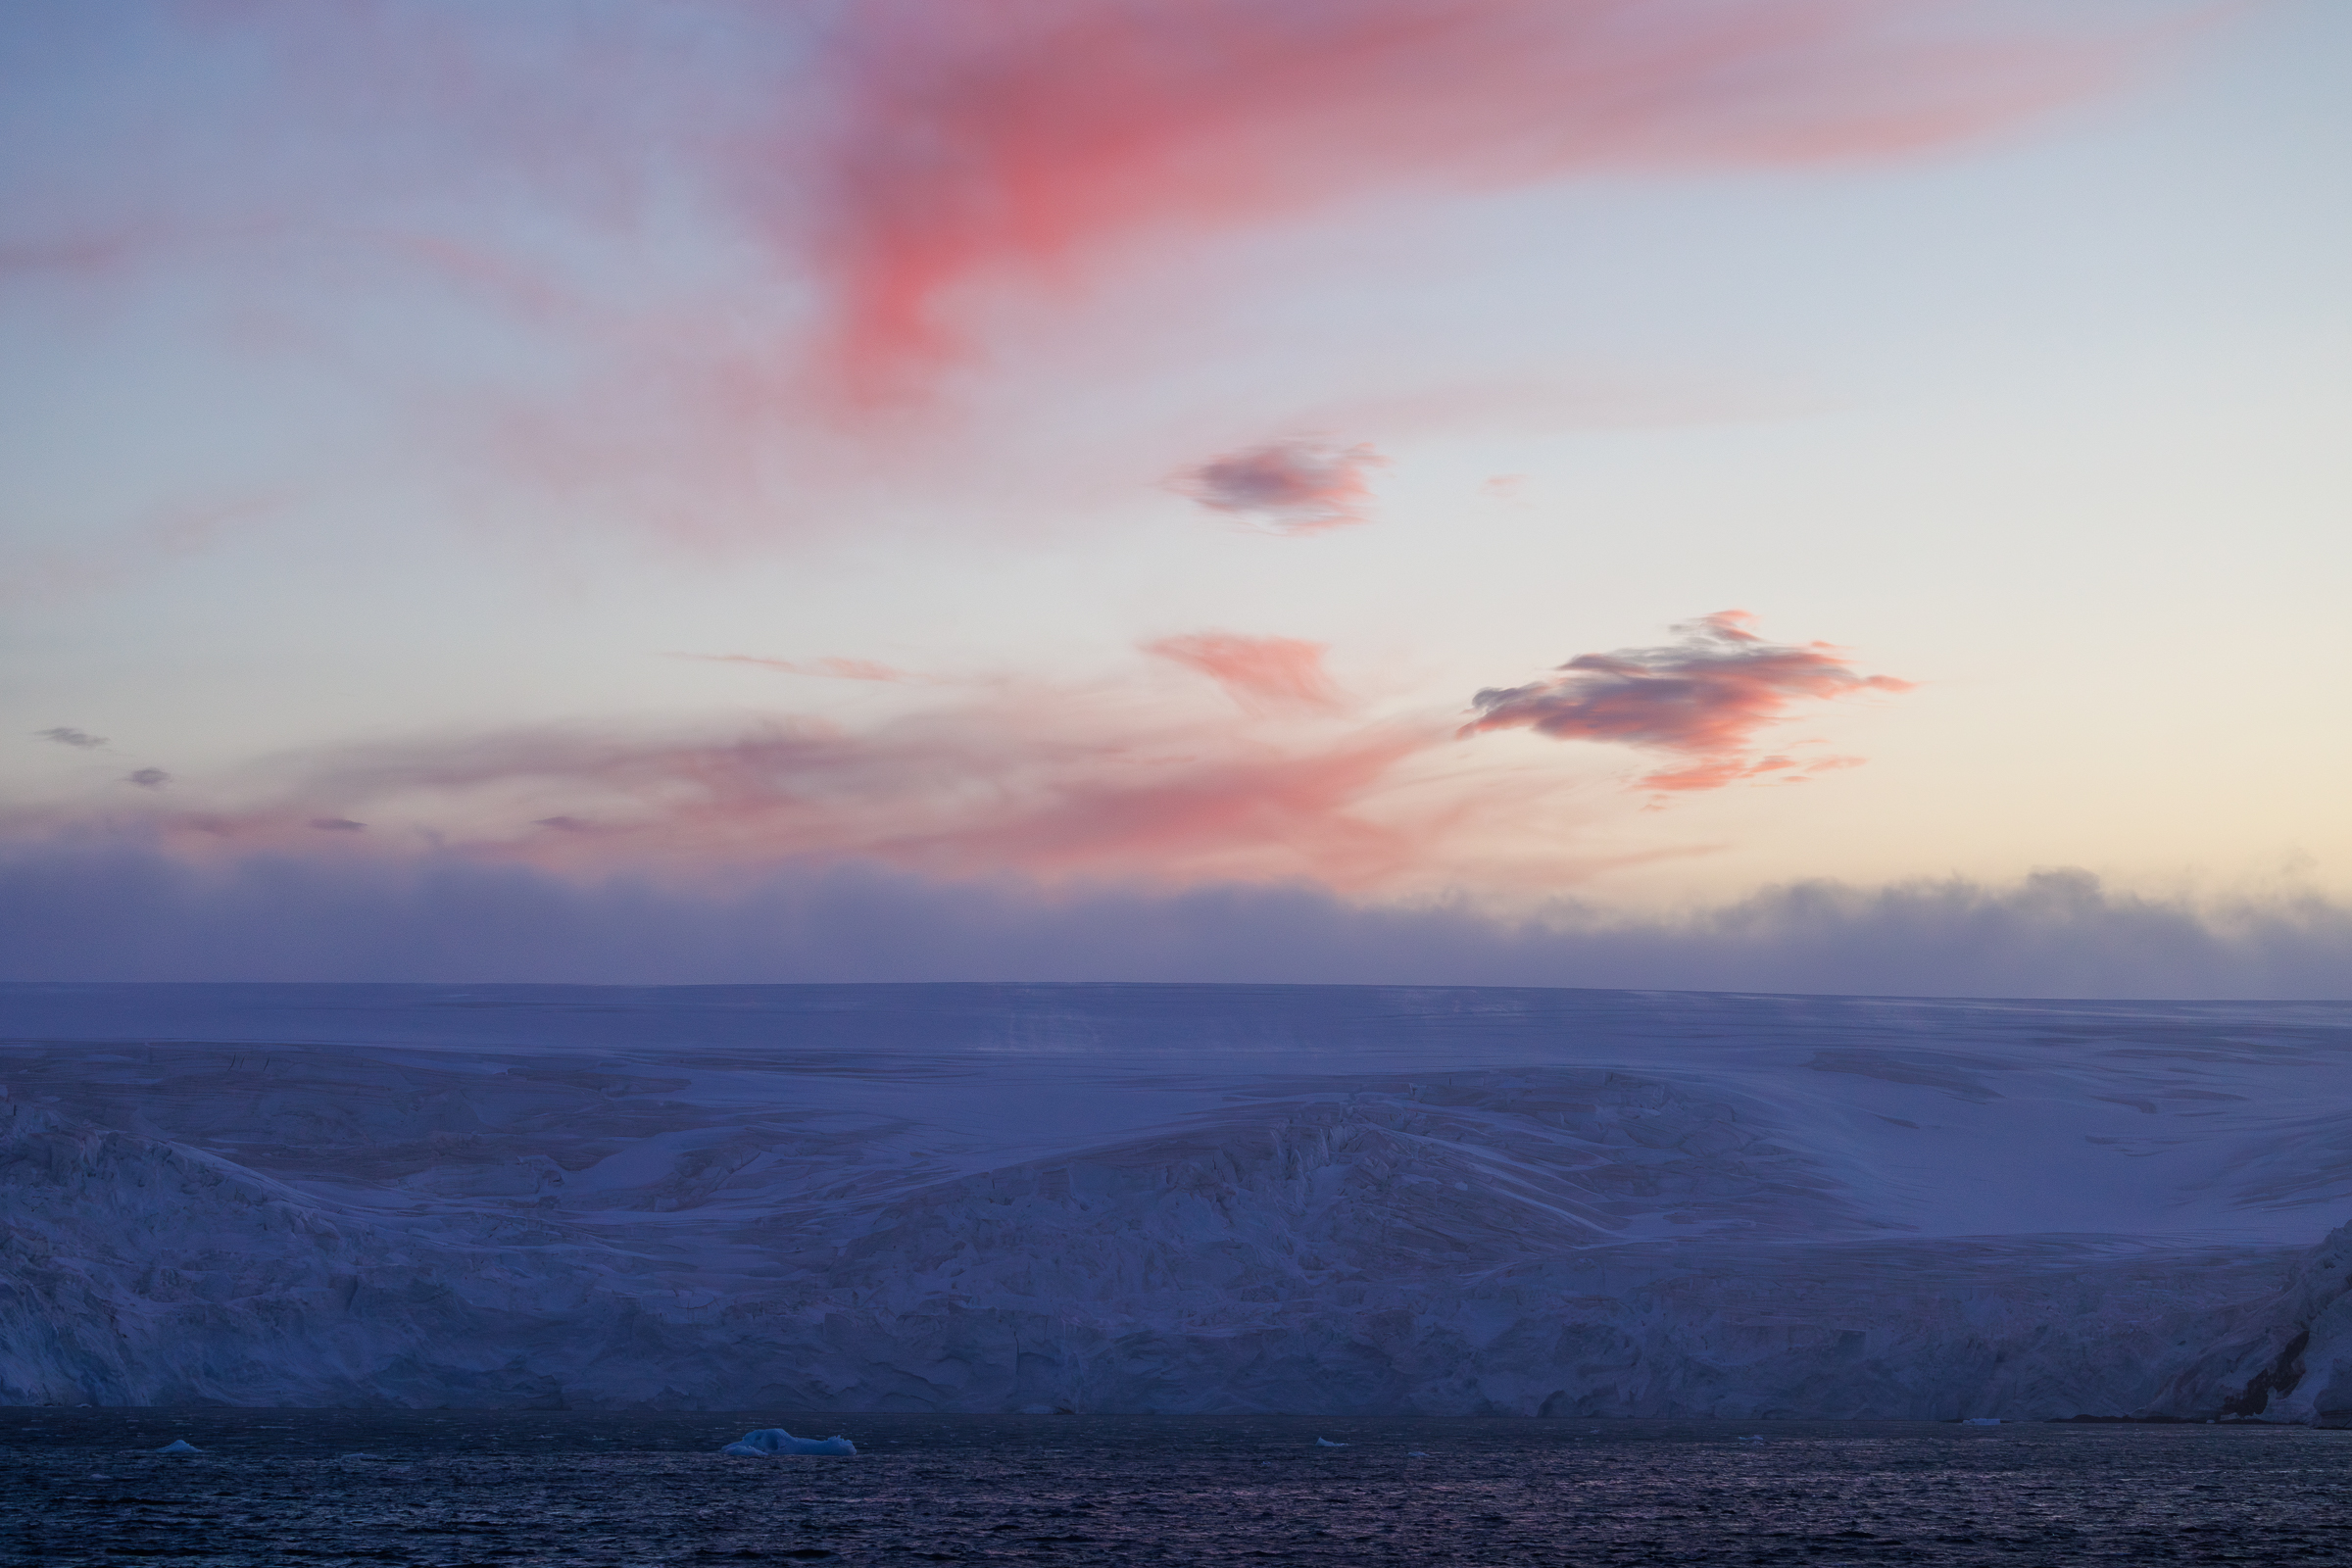 Our last sunrise on the South Shetland Islands.